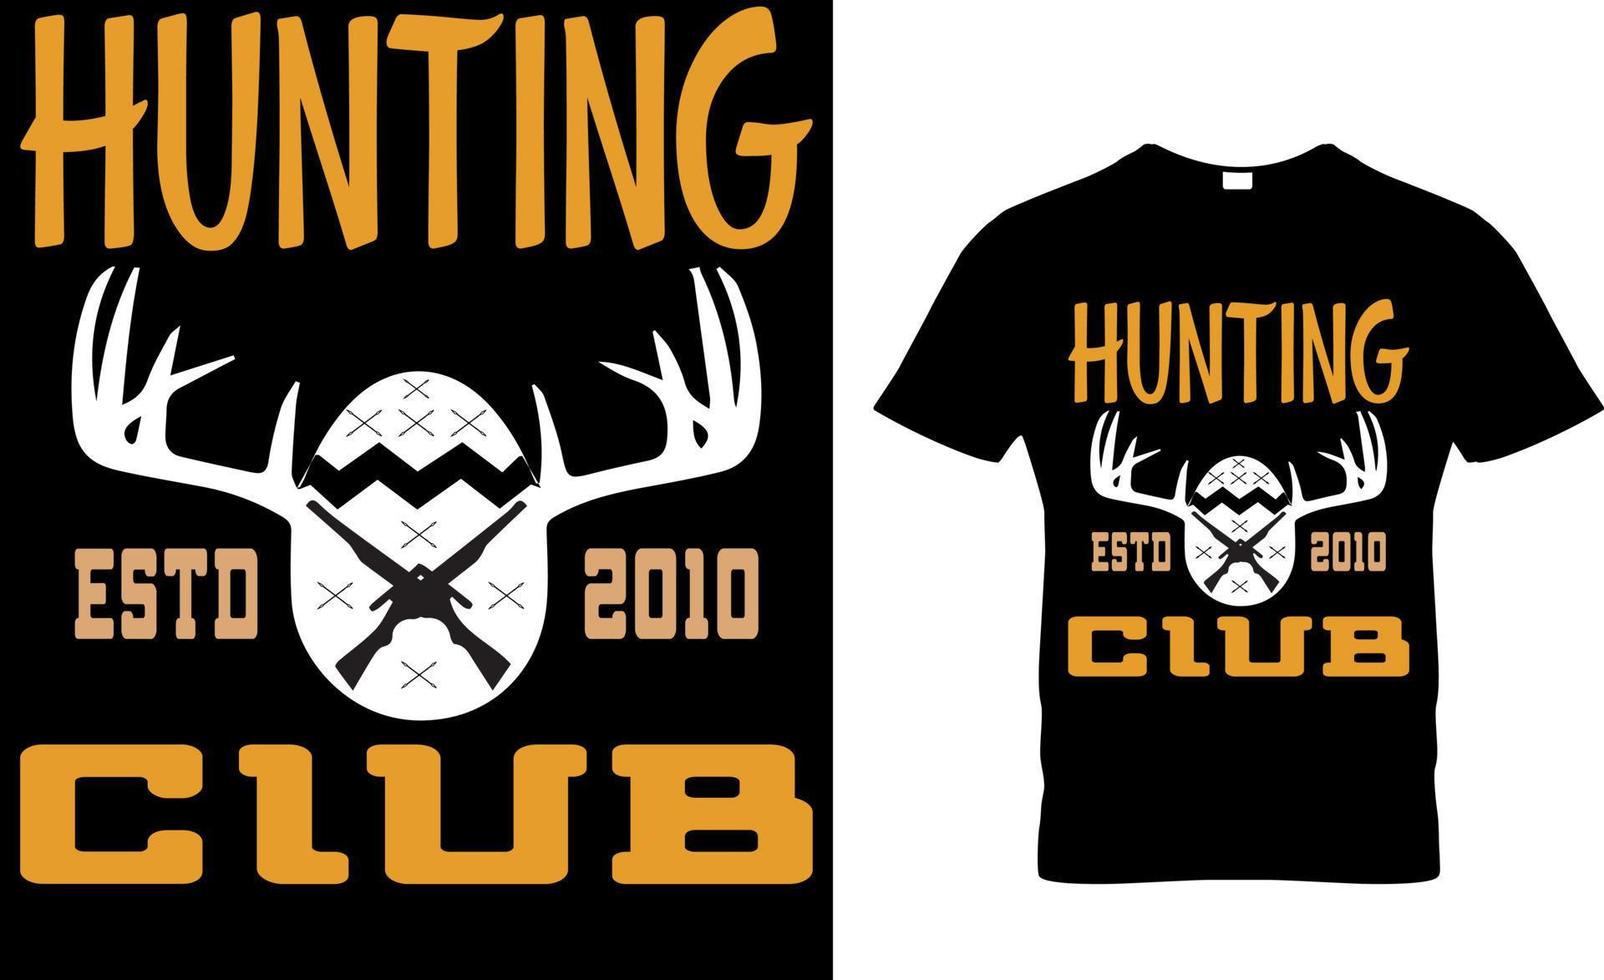 design de camiseta do clube de caça estd 2010 vetor